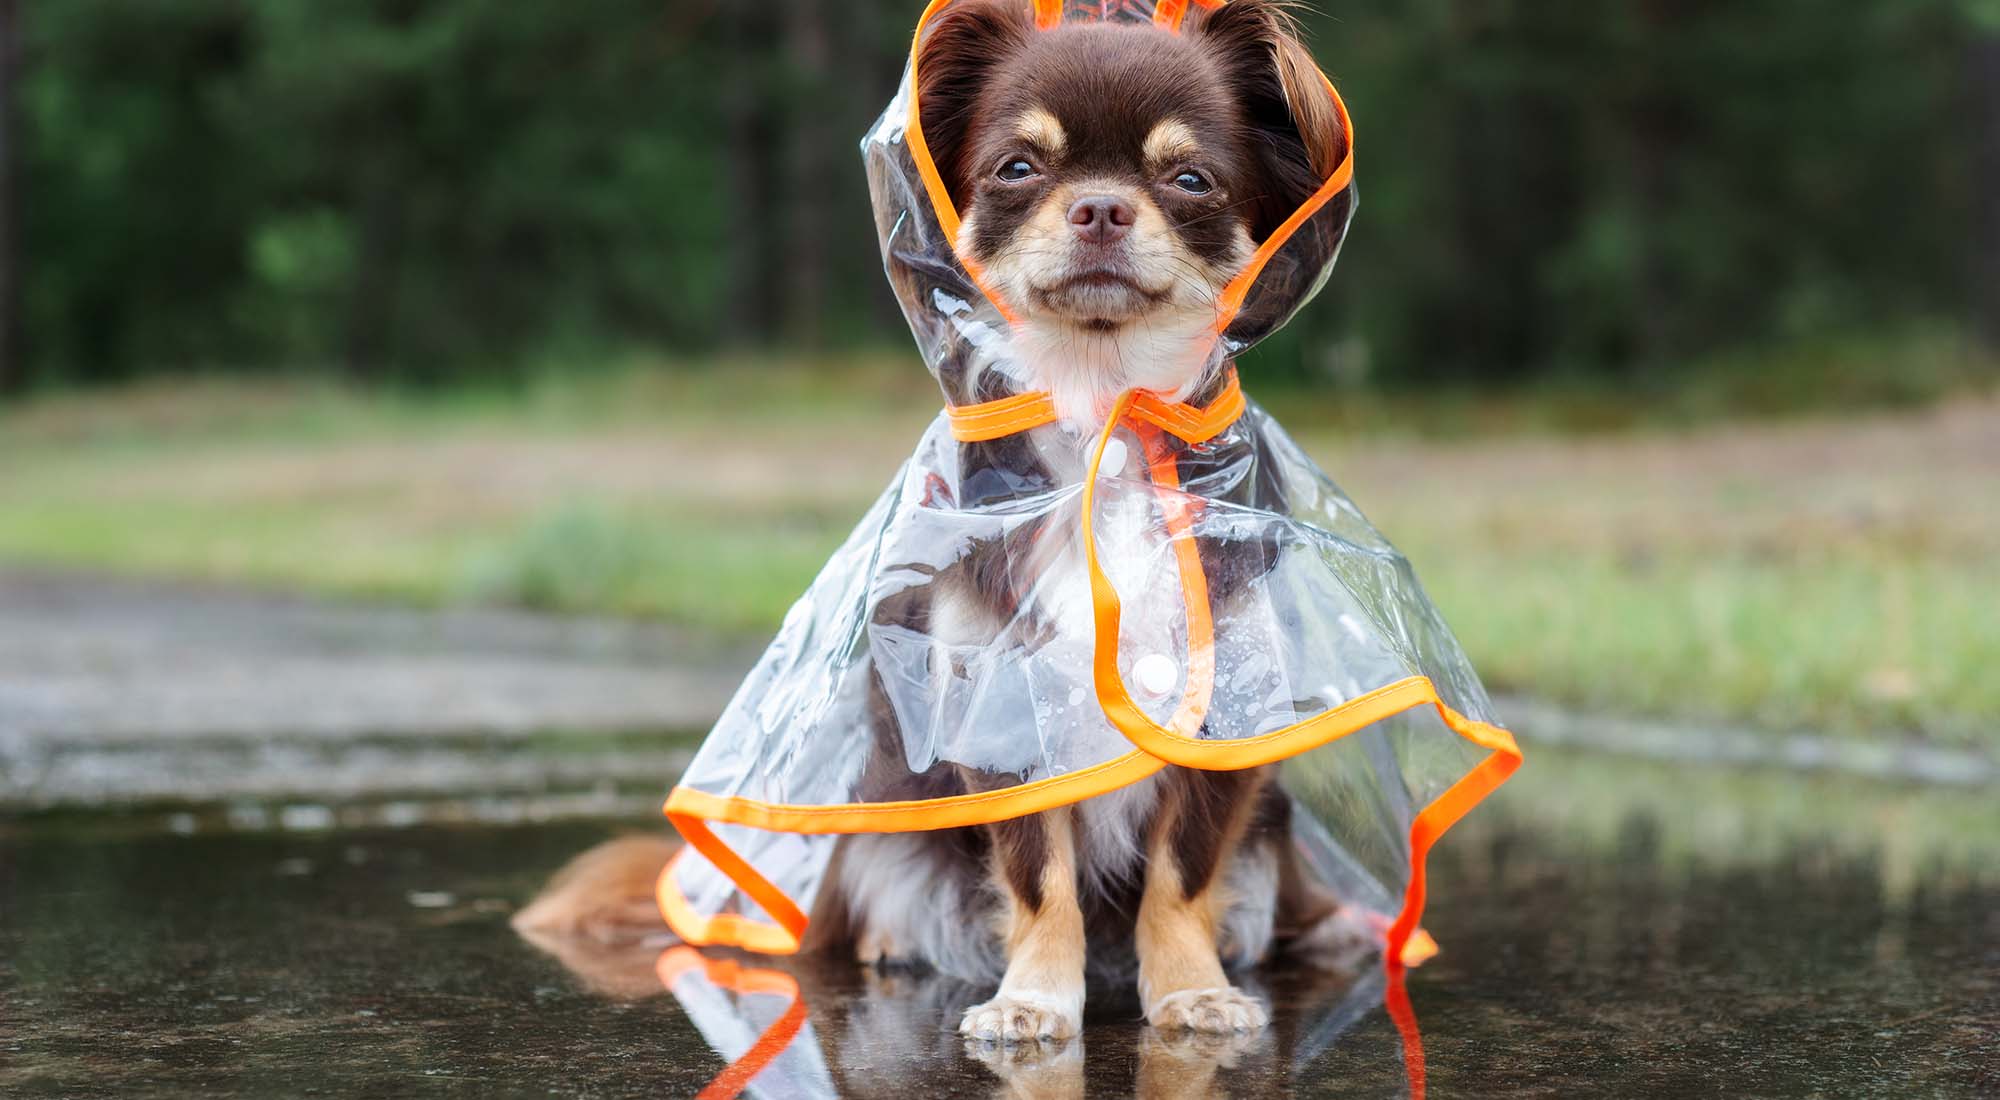 Best Dog Walking Gear for Rain and Shine